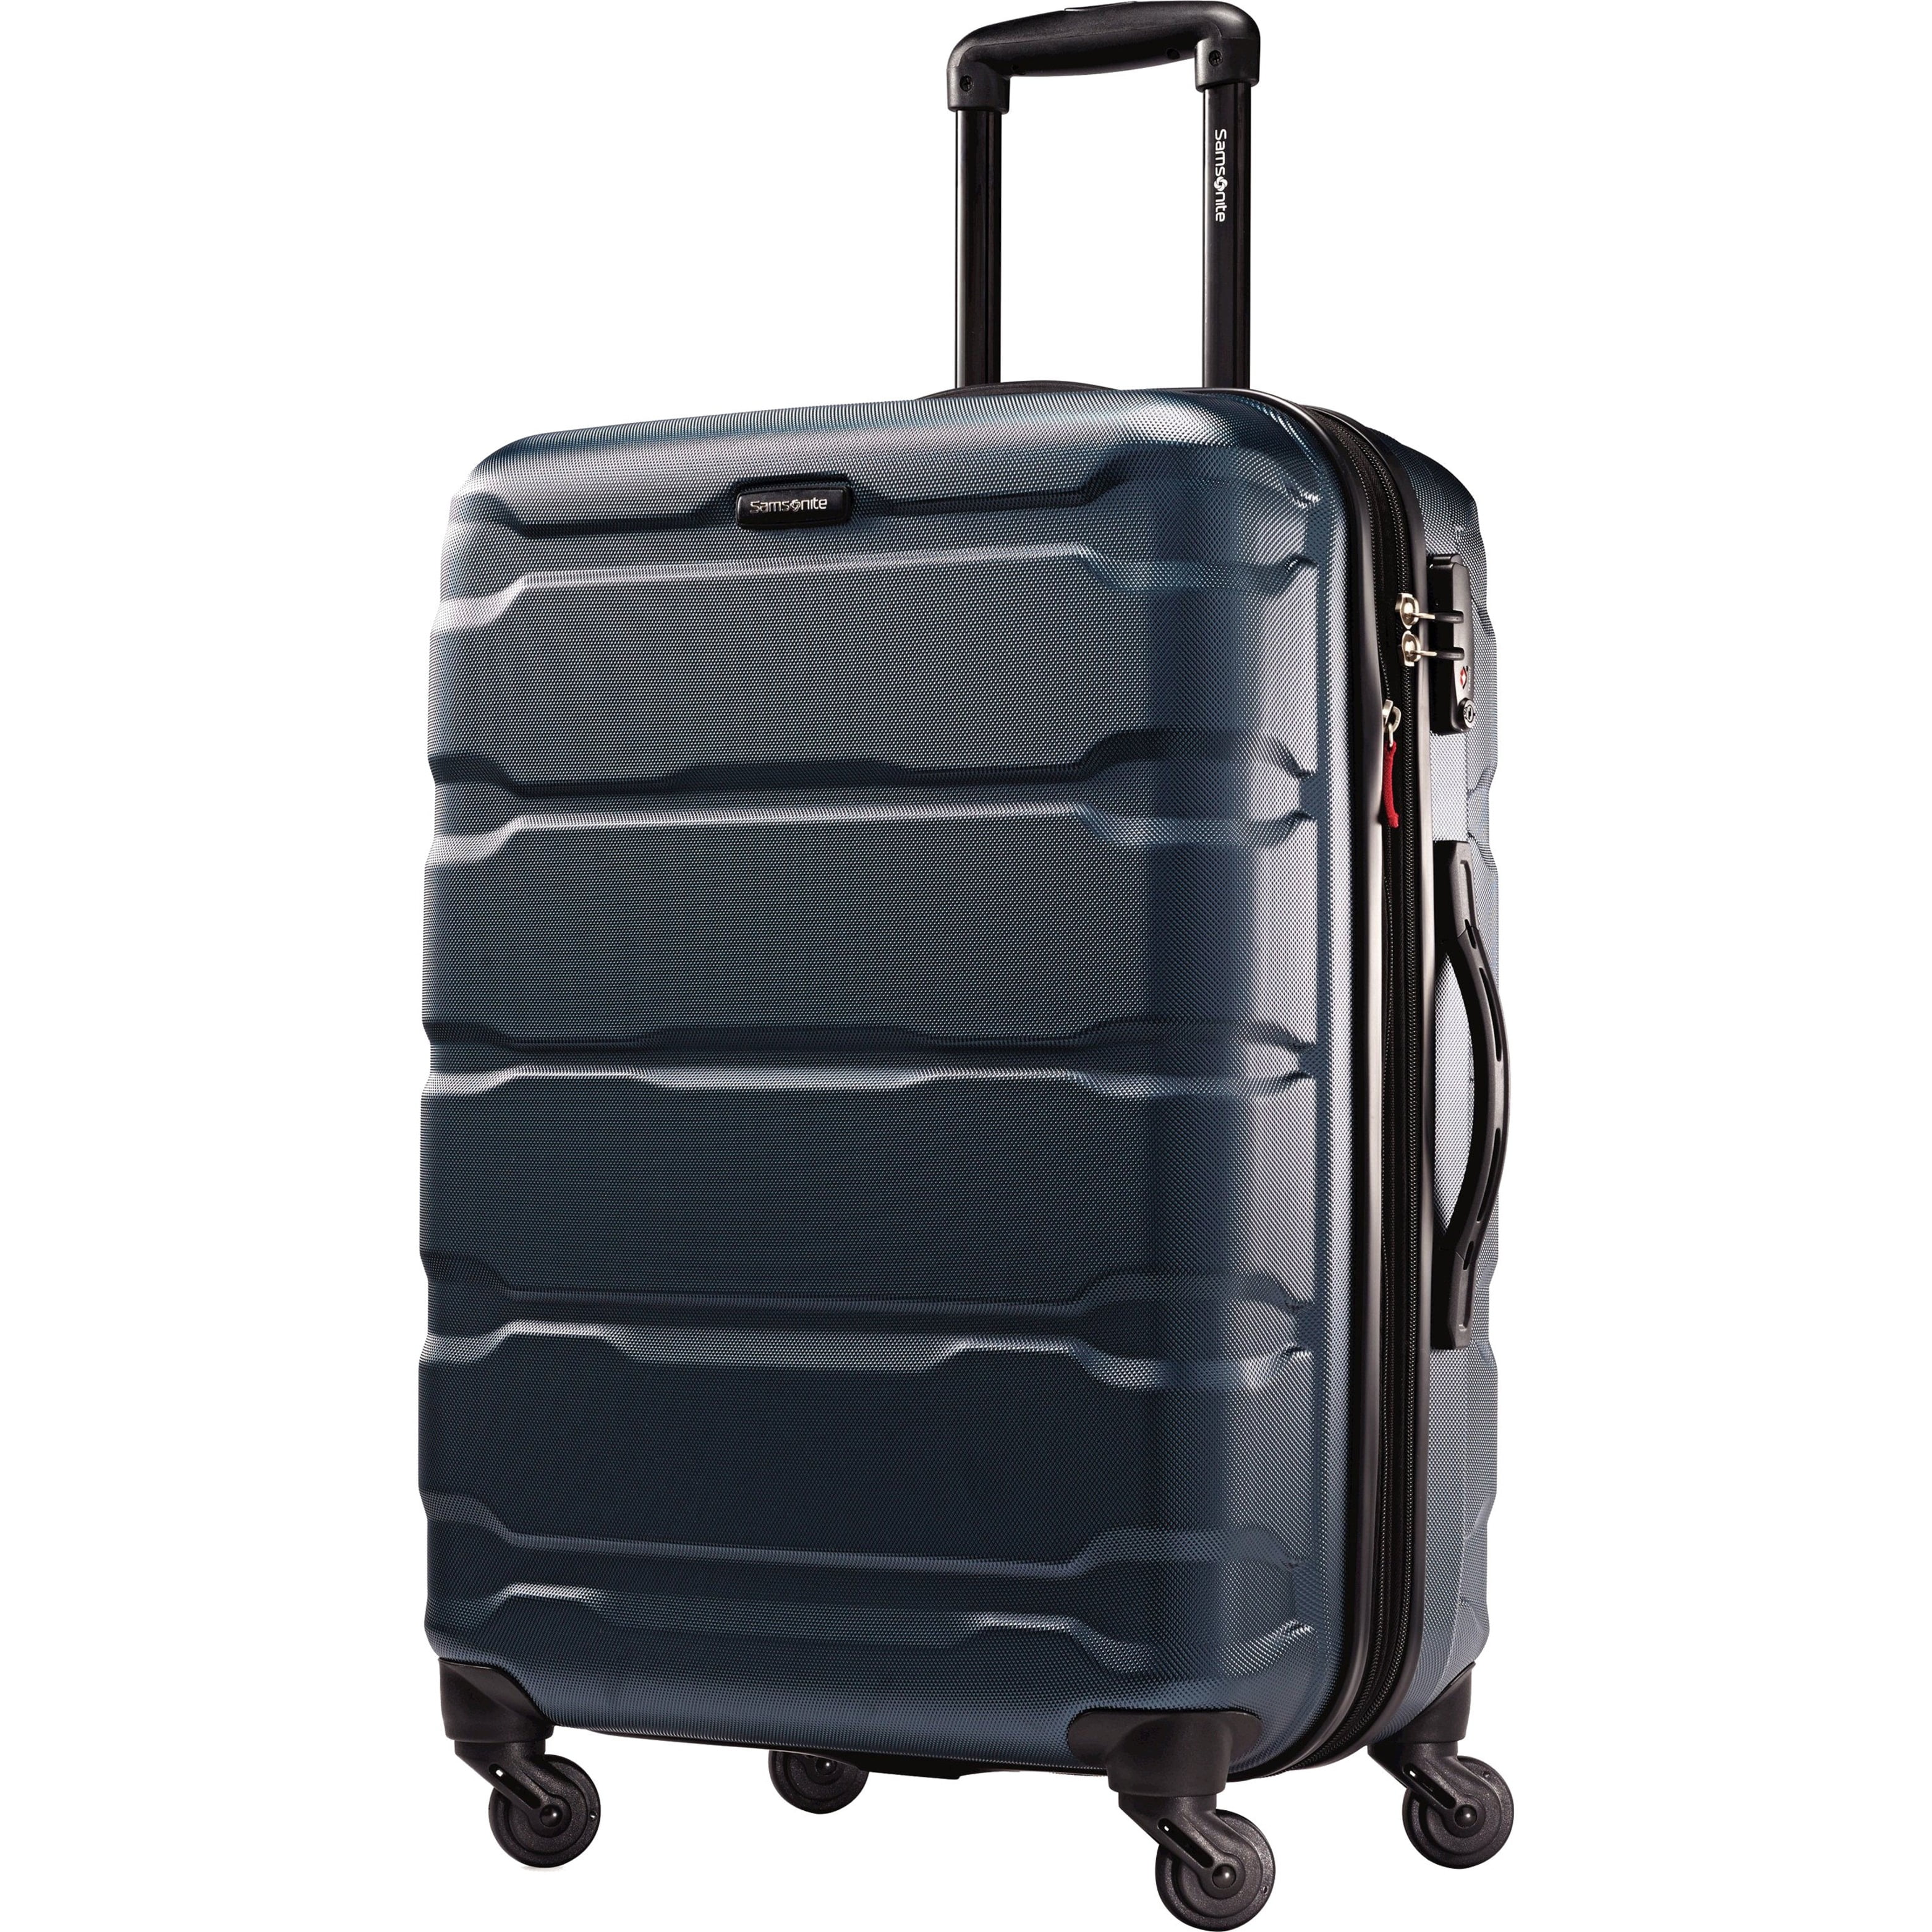 temperament ongebruikt ik ben trots Samsonite Omni Travel/Luggage Case (Roller) Travel Essential, Teal -  Walmart.com